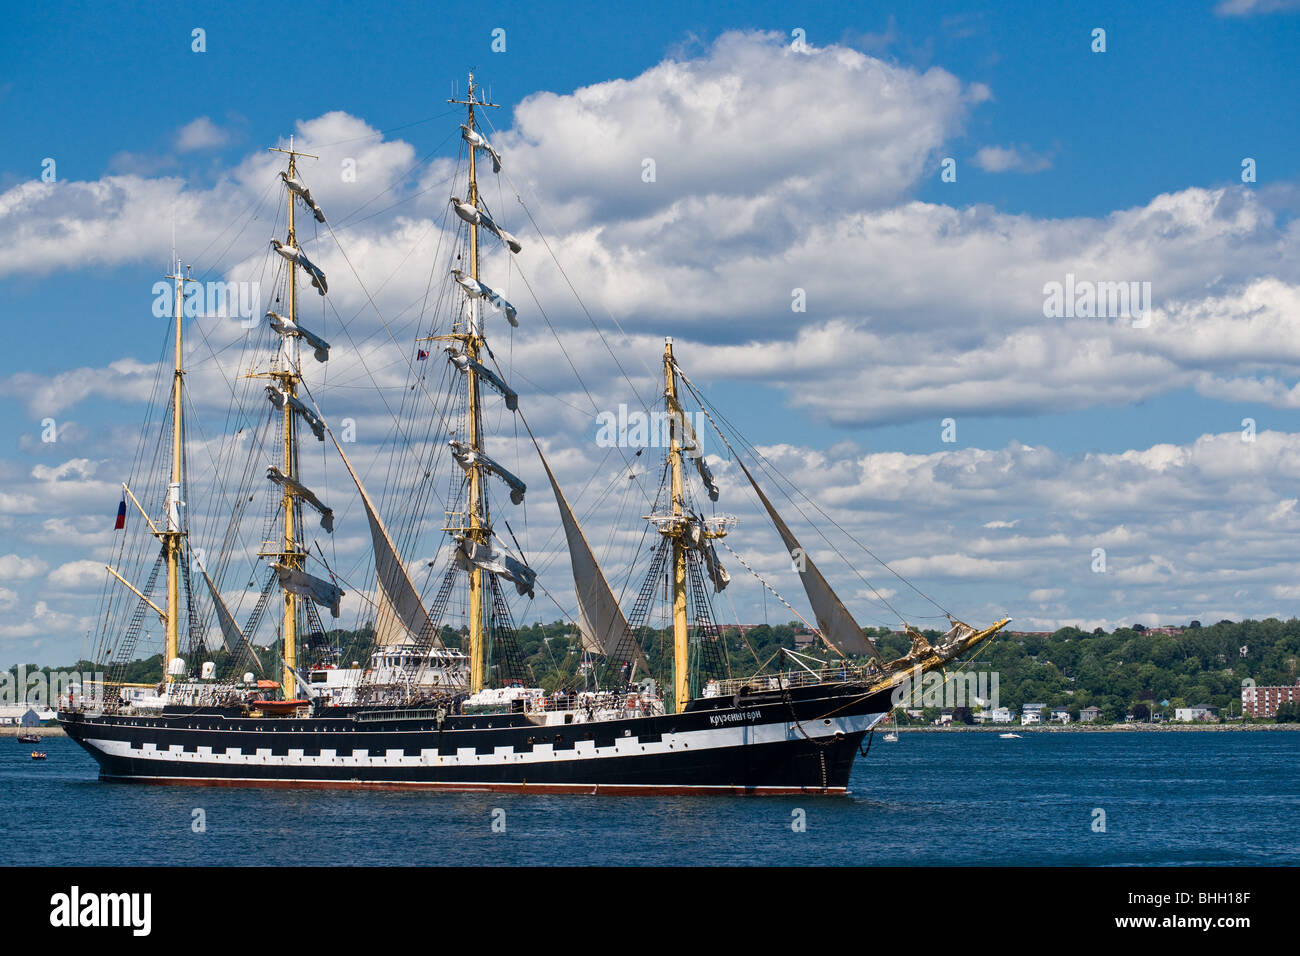 The Russian four masted barque Kruzenshtern during the 2009 Tall Ships festival in Halifax, Nova Scotia. Stock Photo